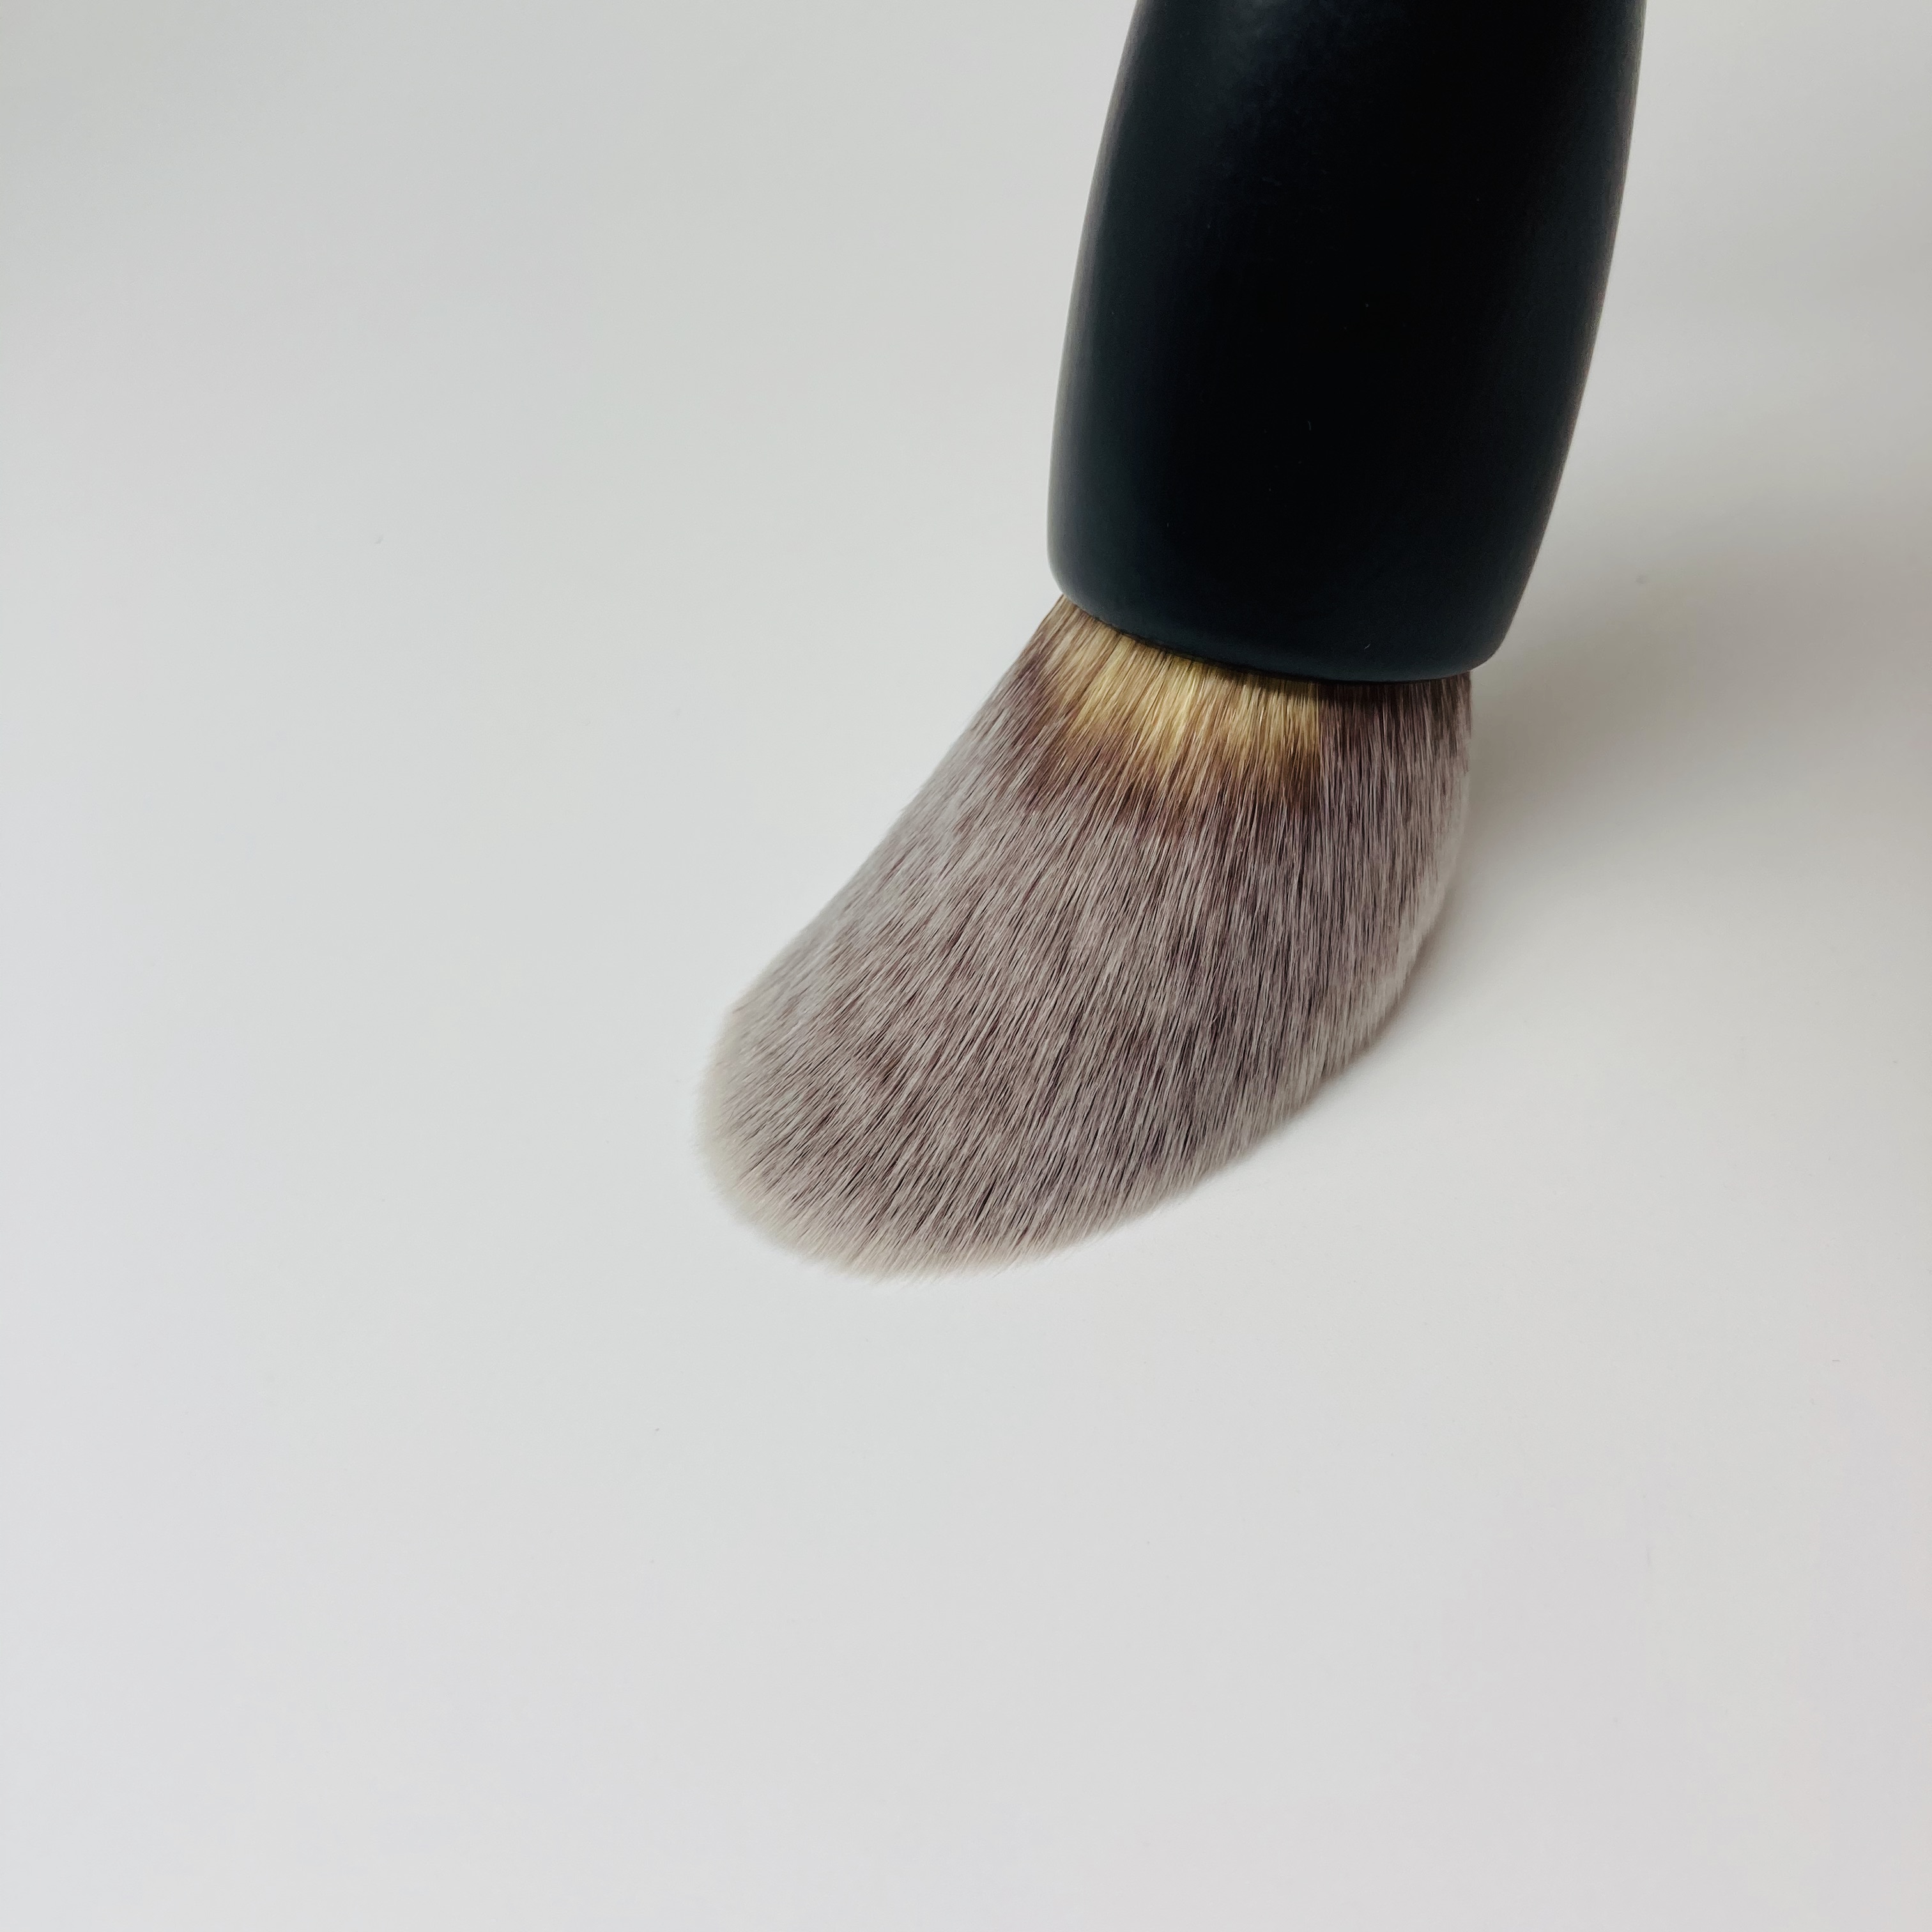 Single brush super soft vegan synthetic hair large makeup powder brush